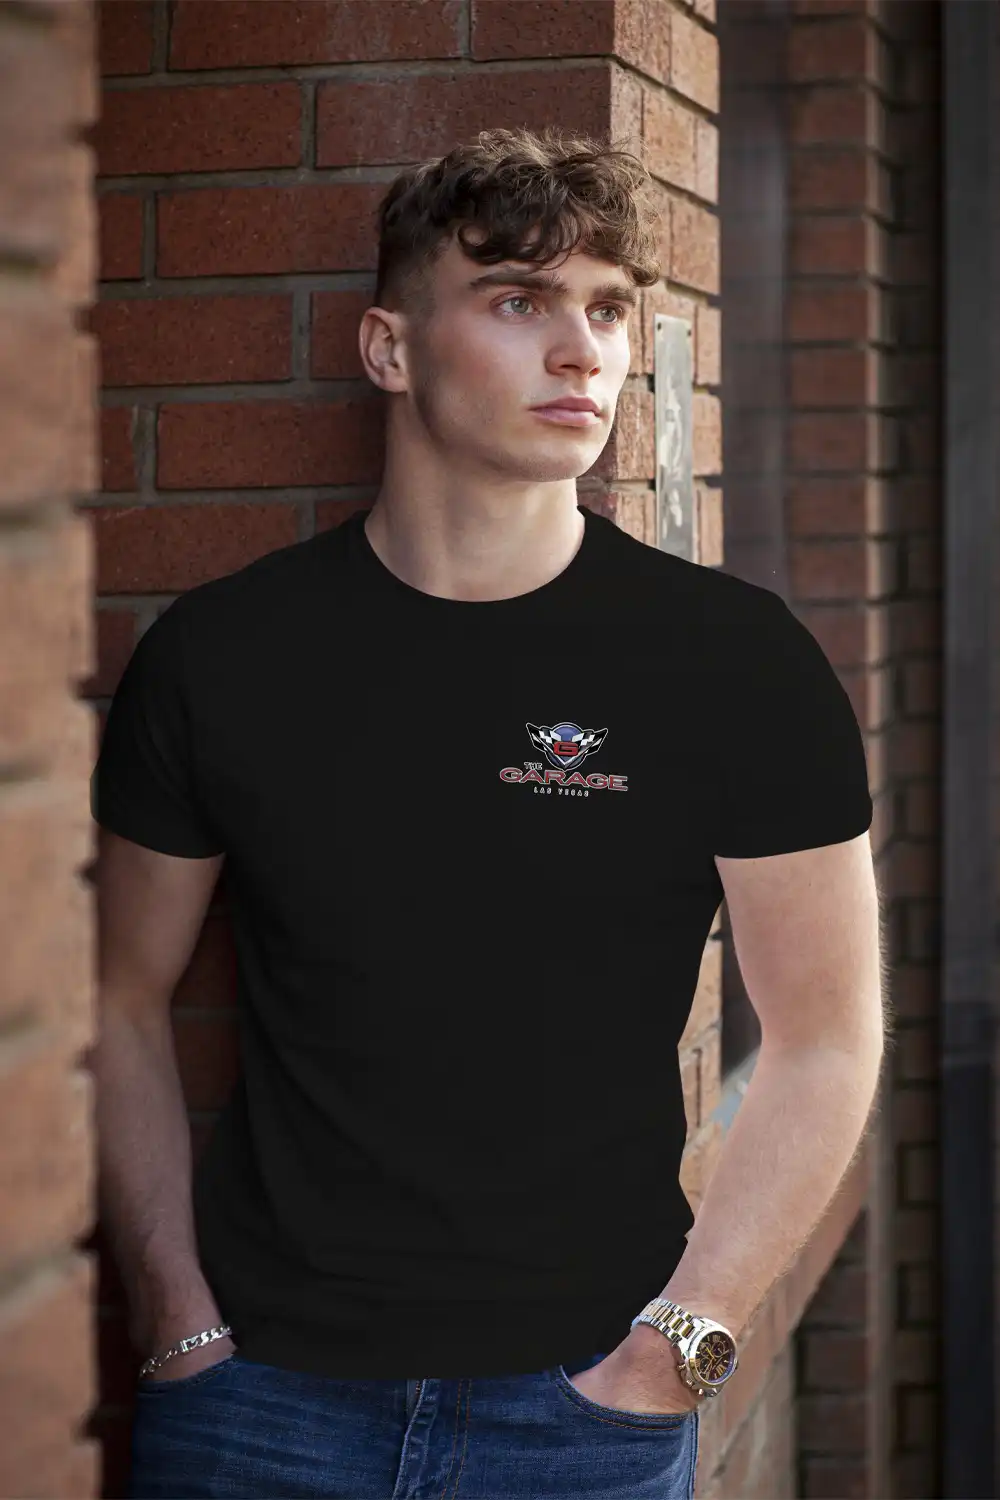 Handsome guy modeling a black T-shirt with The Garage Las Vegas logo